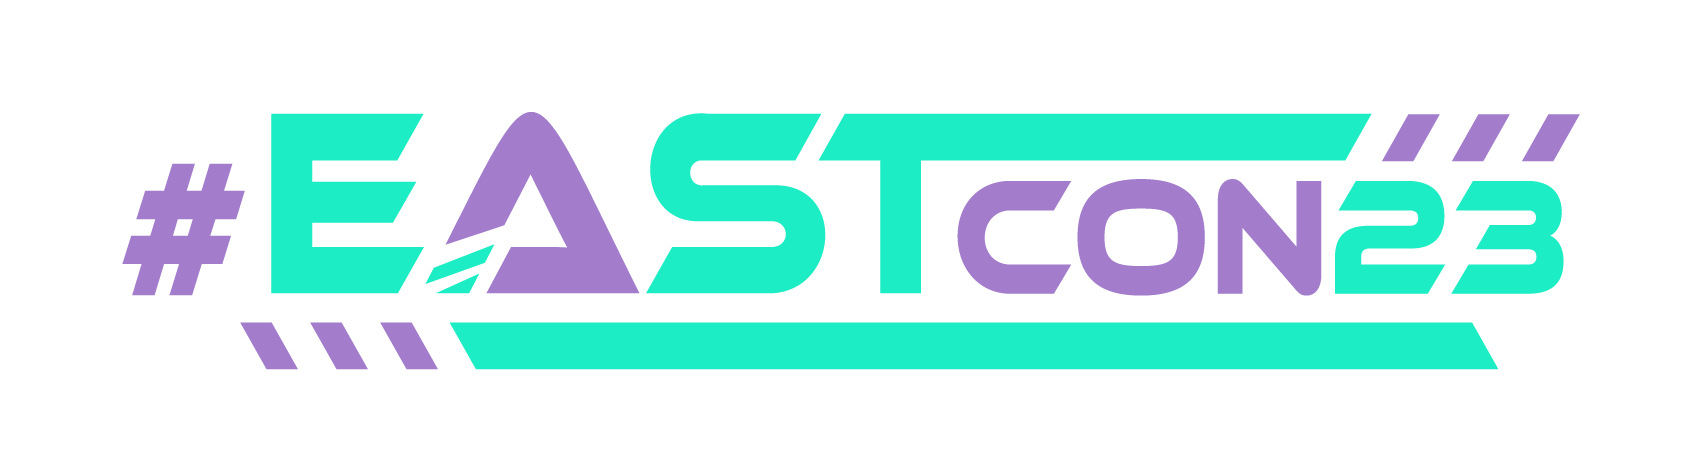 EAST Initiative Logo